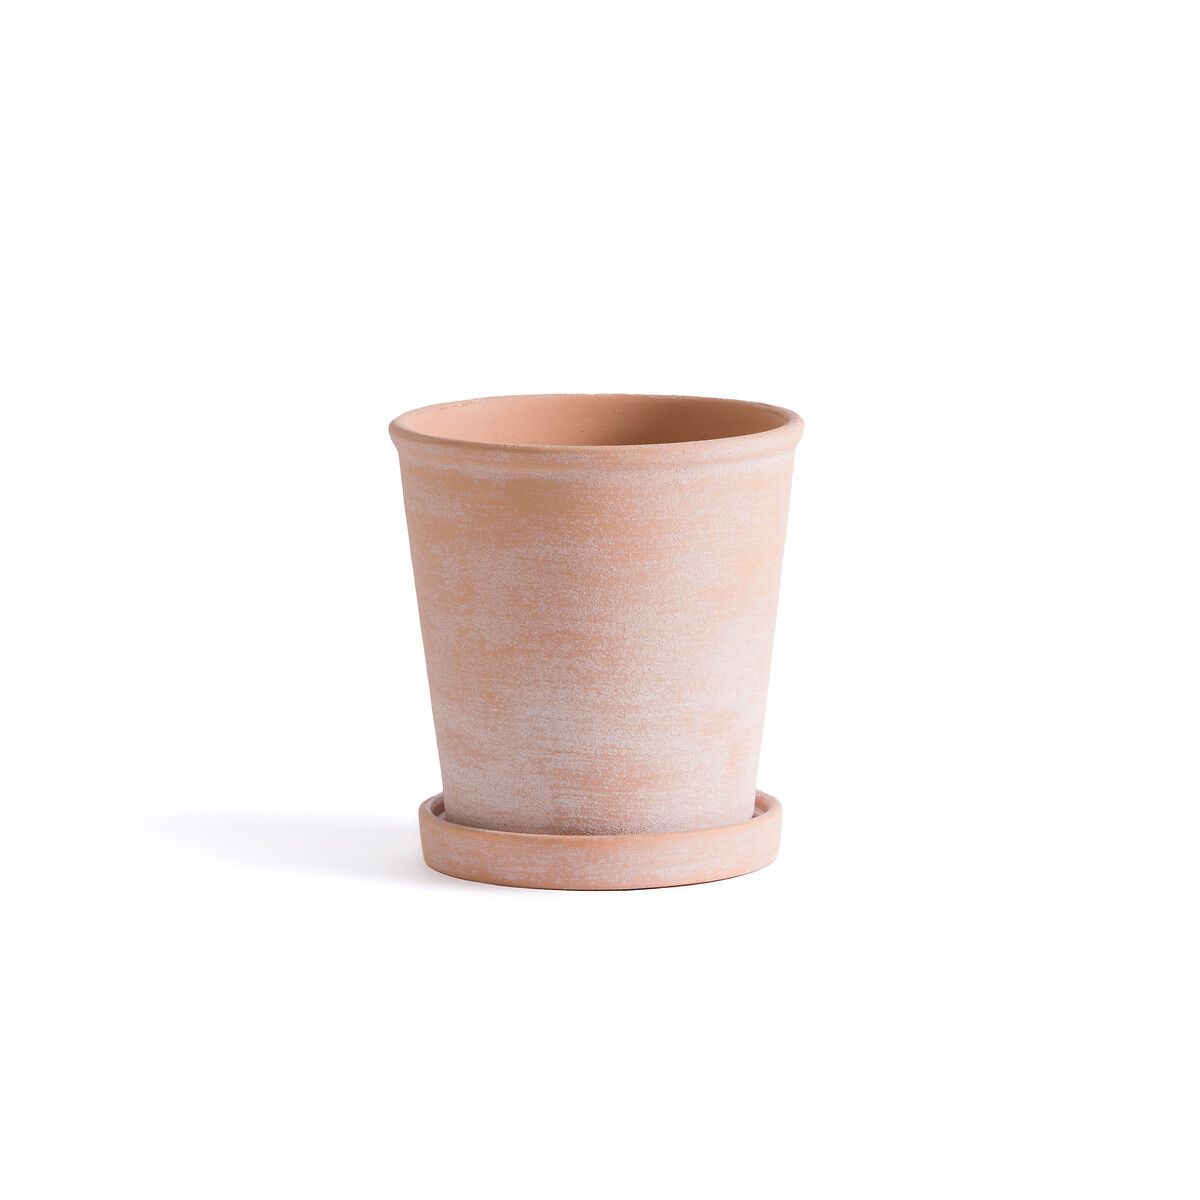 Argilo 15.5cm Diameter Ceramic Flowerpot with Saucer | La Redoute (UK)